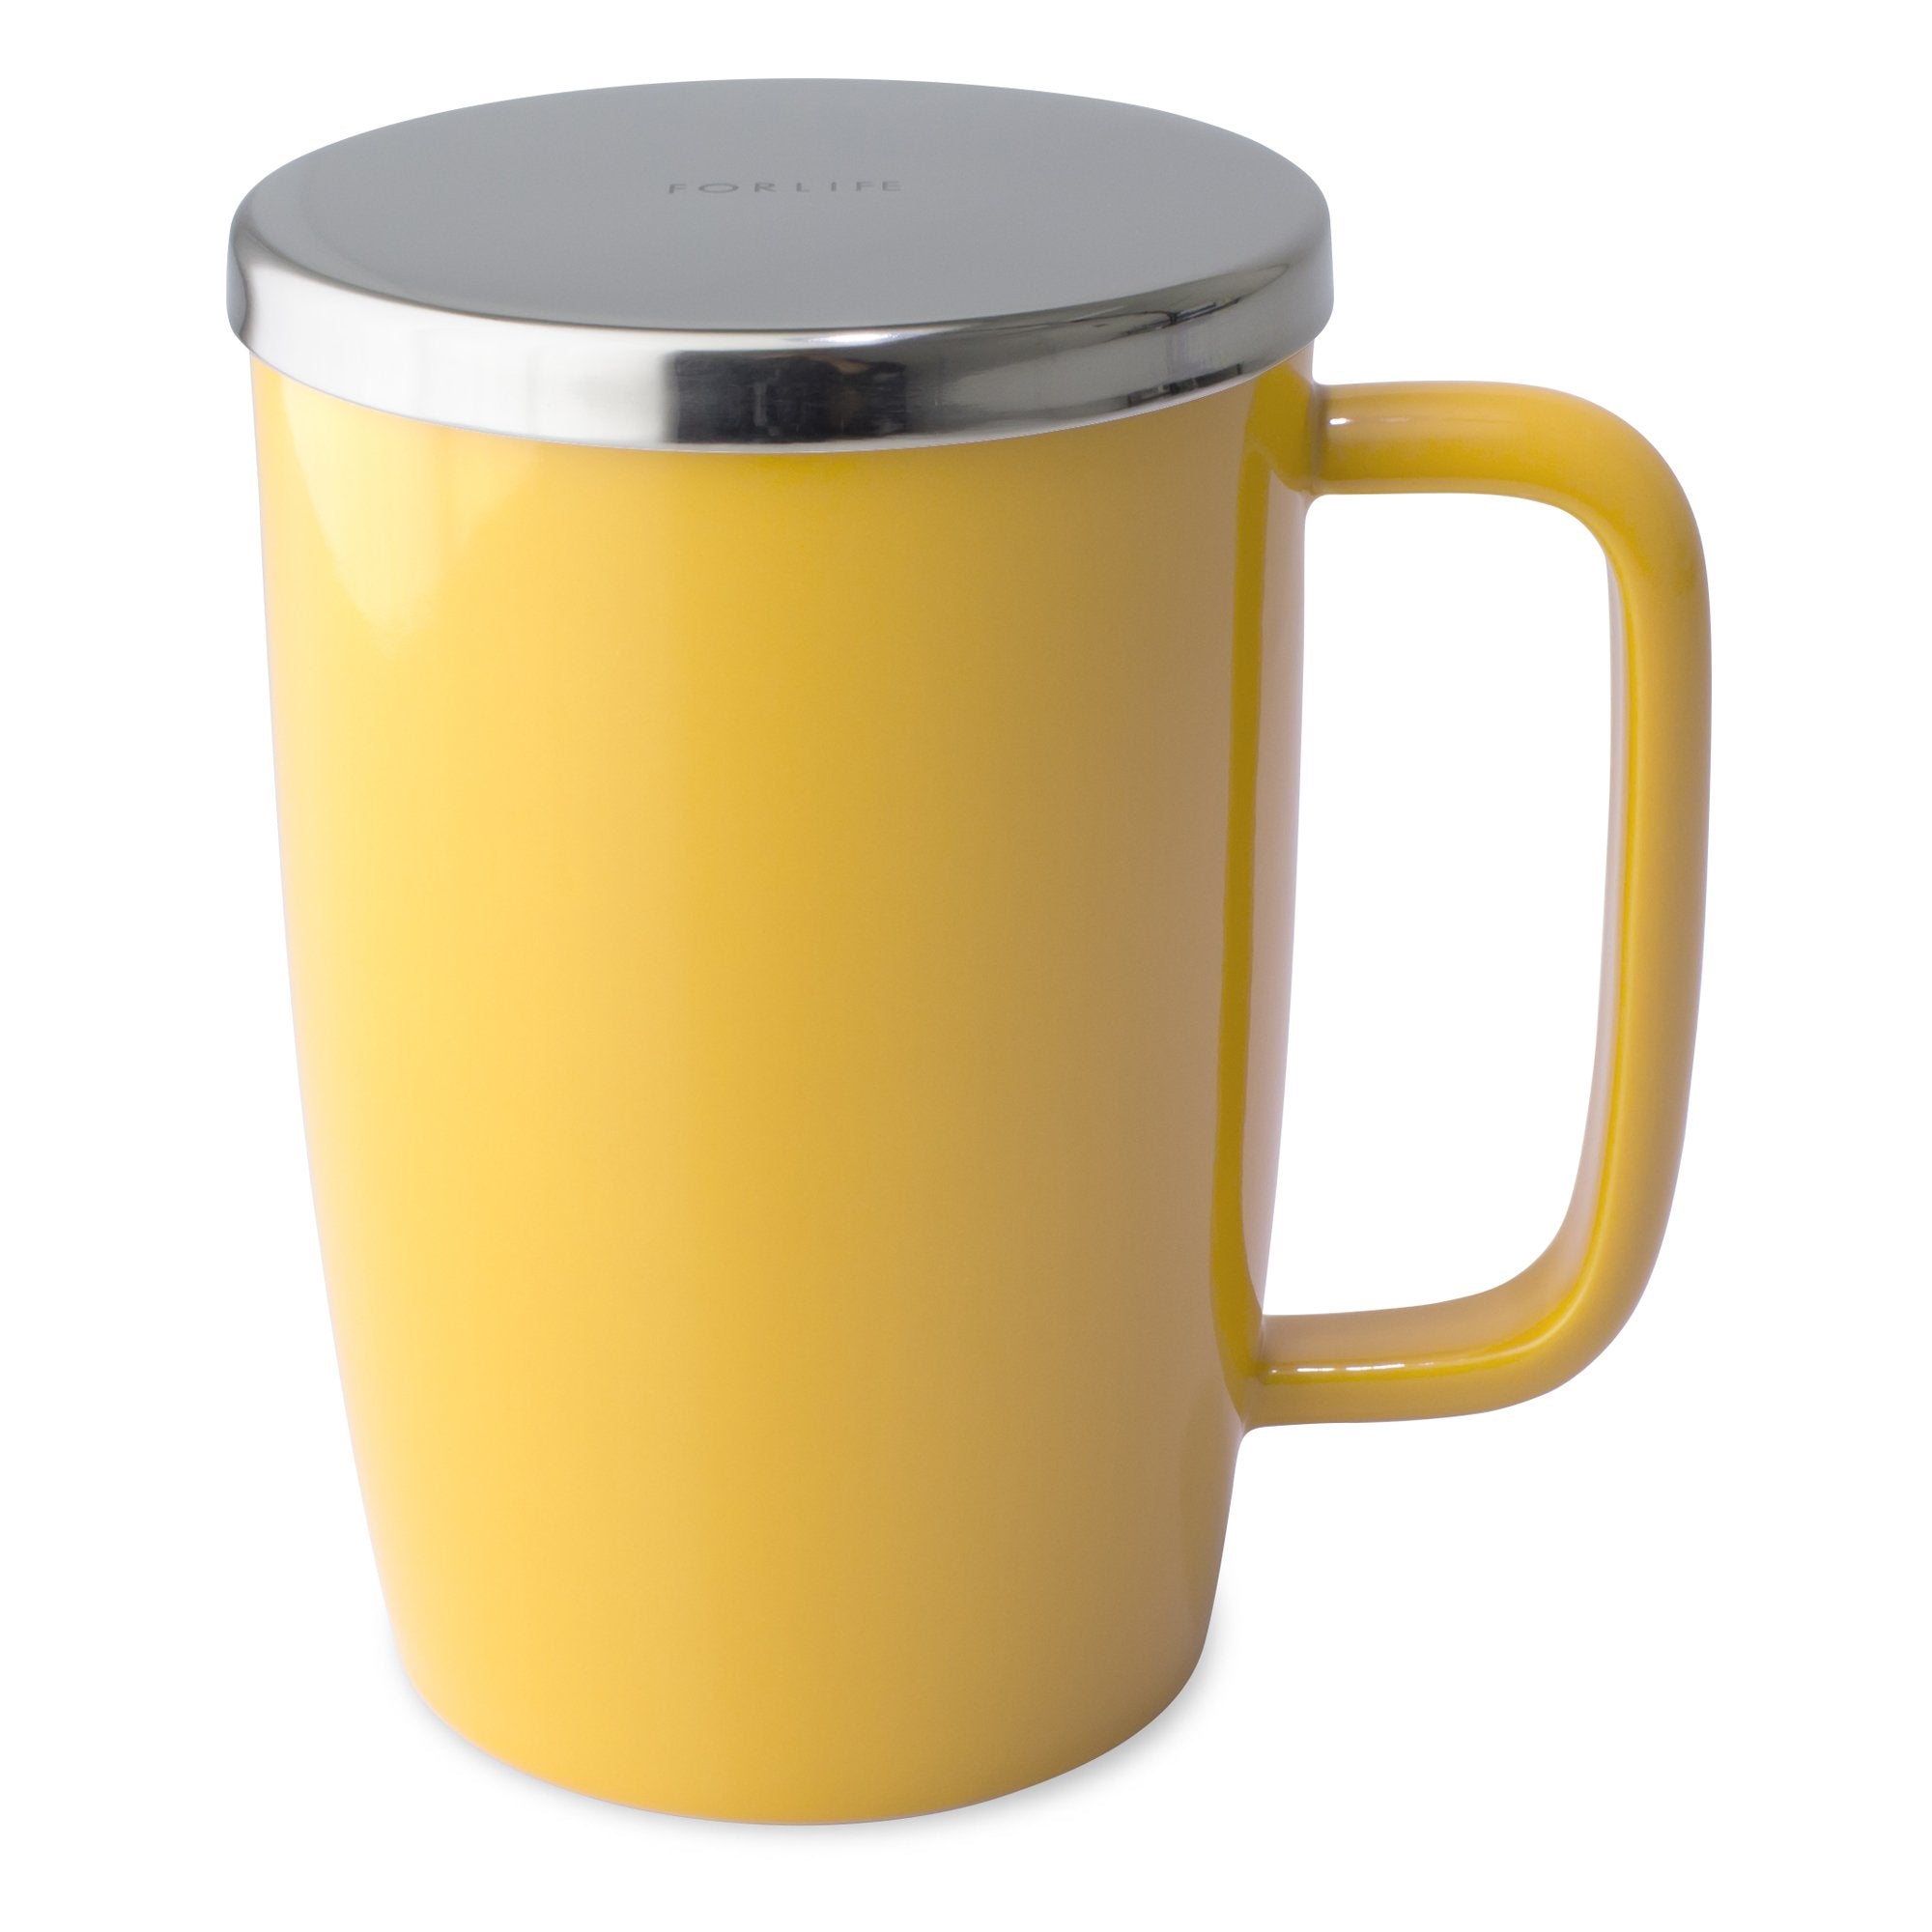 TeaLula 18 oz Mandarin orange yellow colored glossy surface finish mug with large thin rectangle handle and shiny stainless steel lid